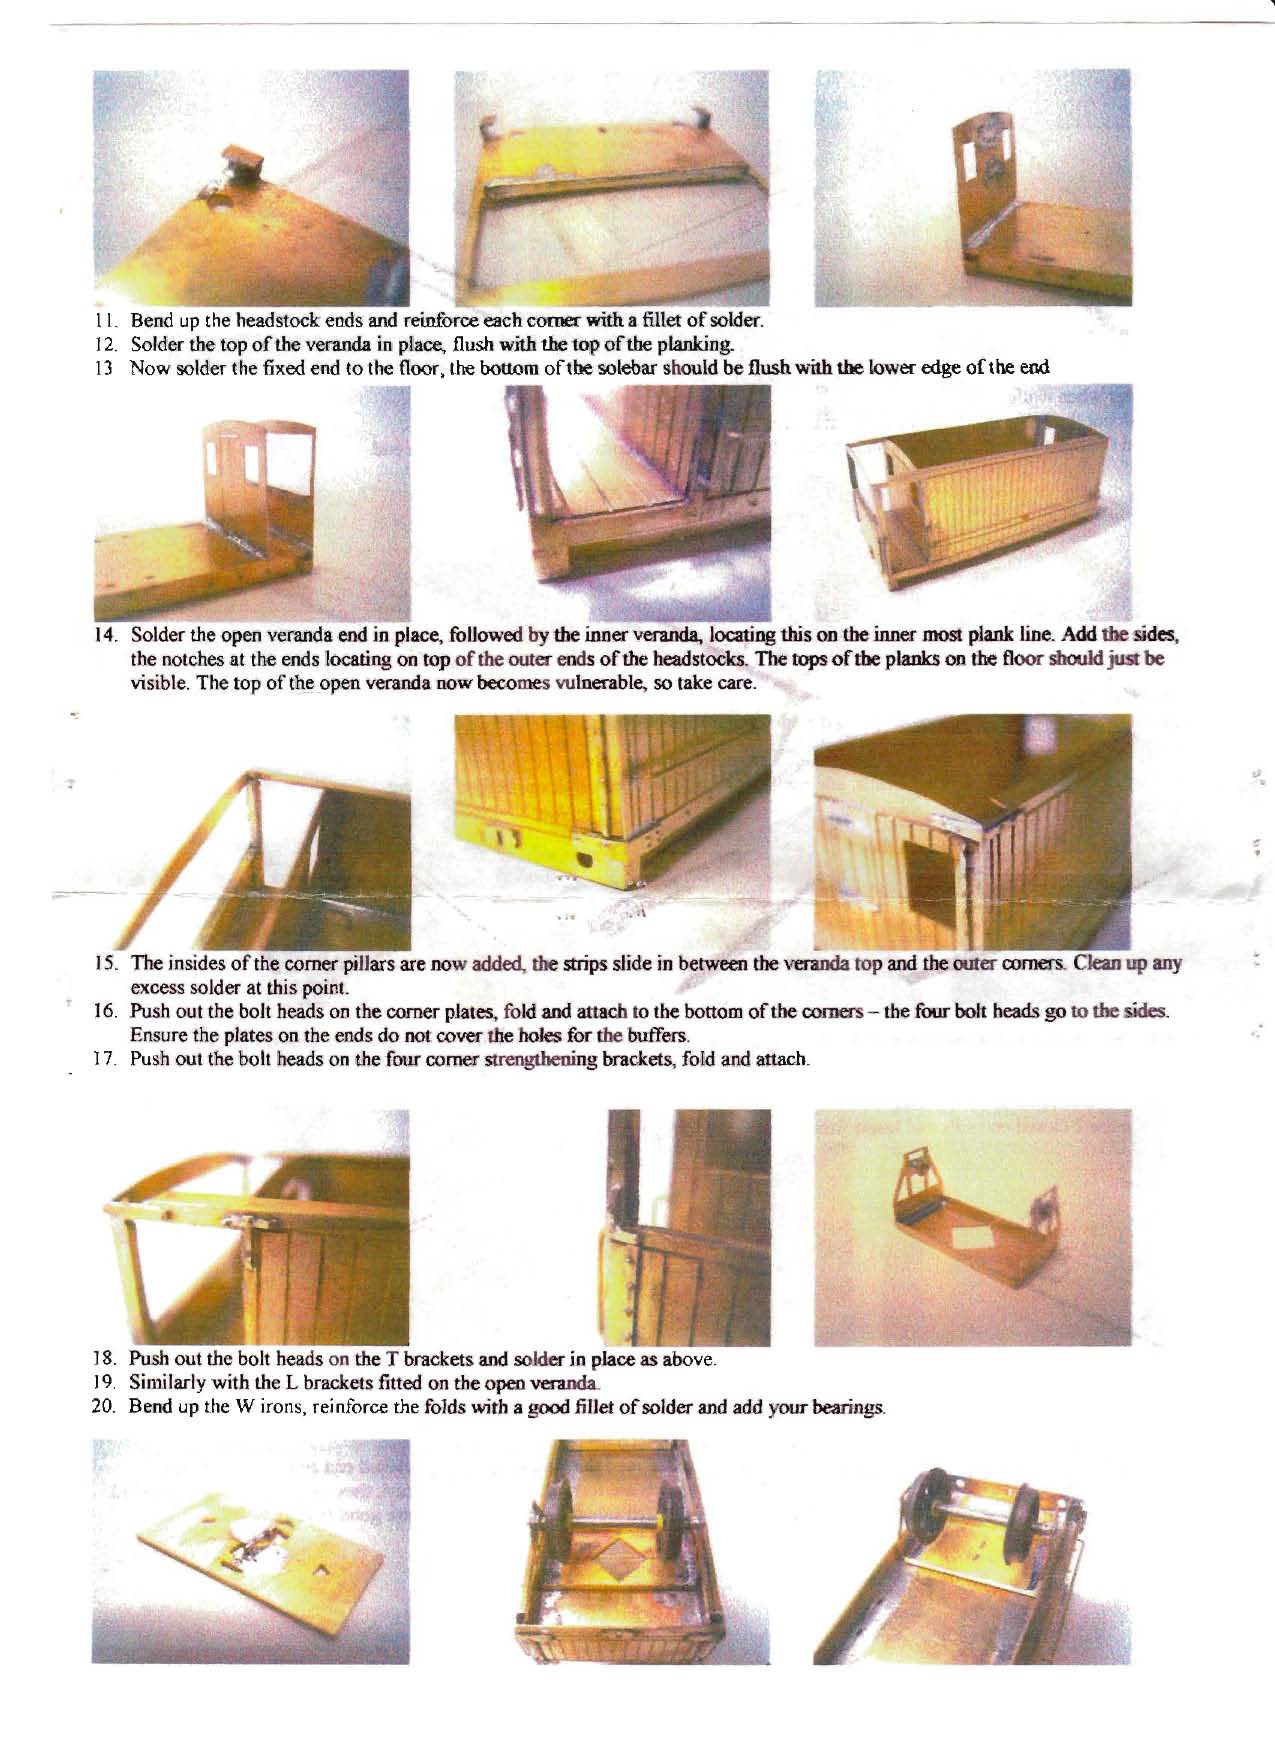 dragon model kit instructions